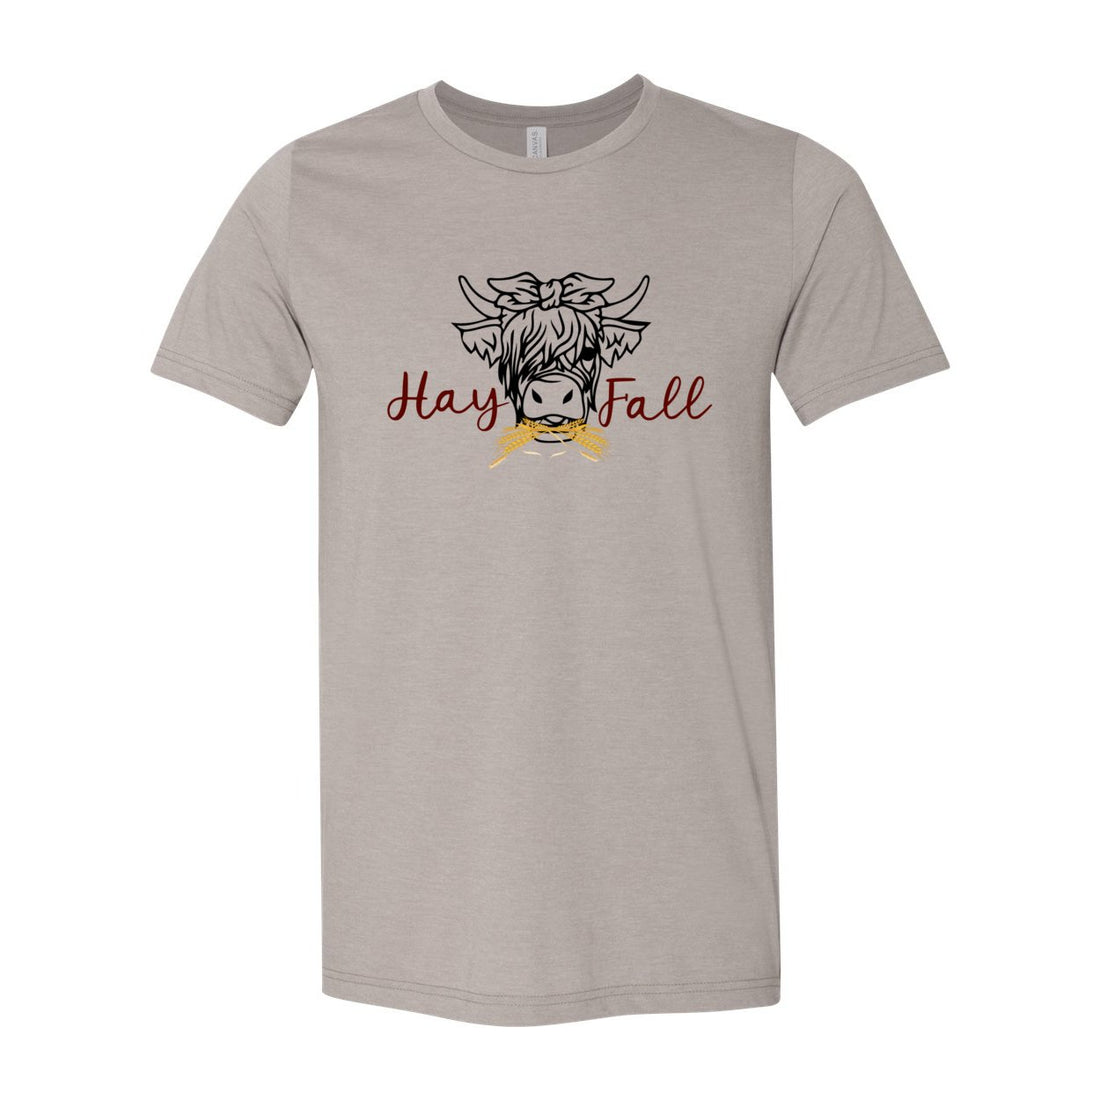 Hay Fall - T-Shirts - Positively Sassy - Hay Fall